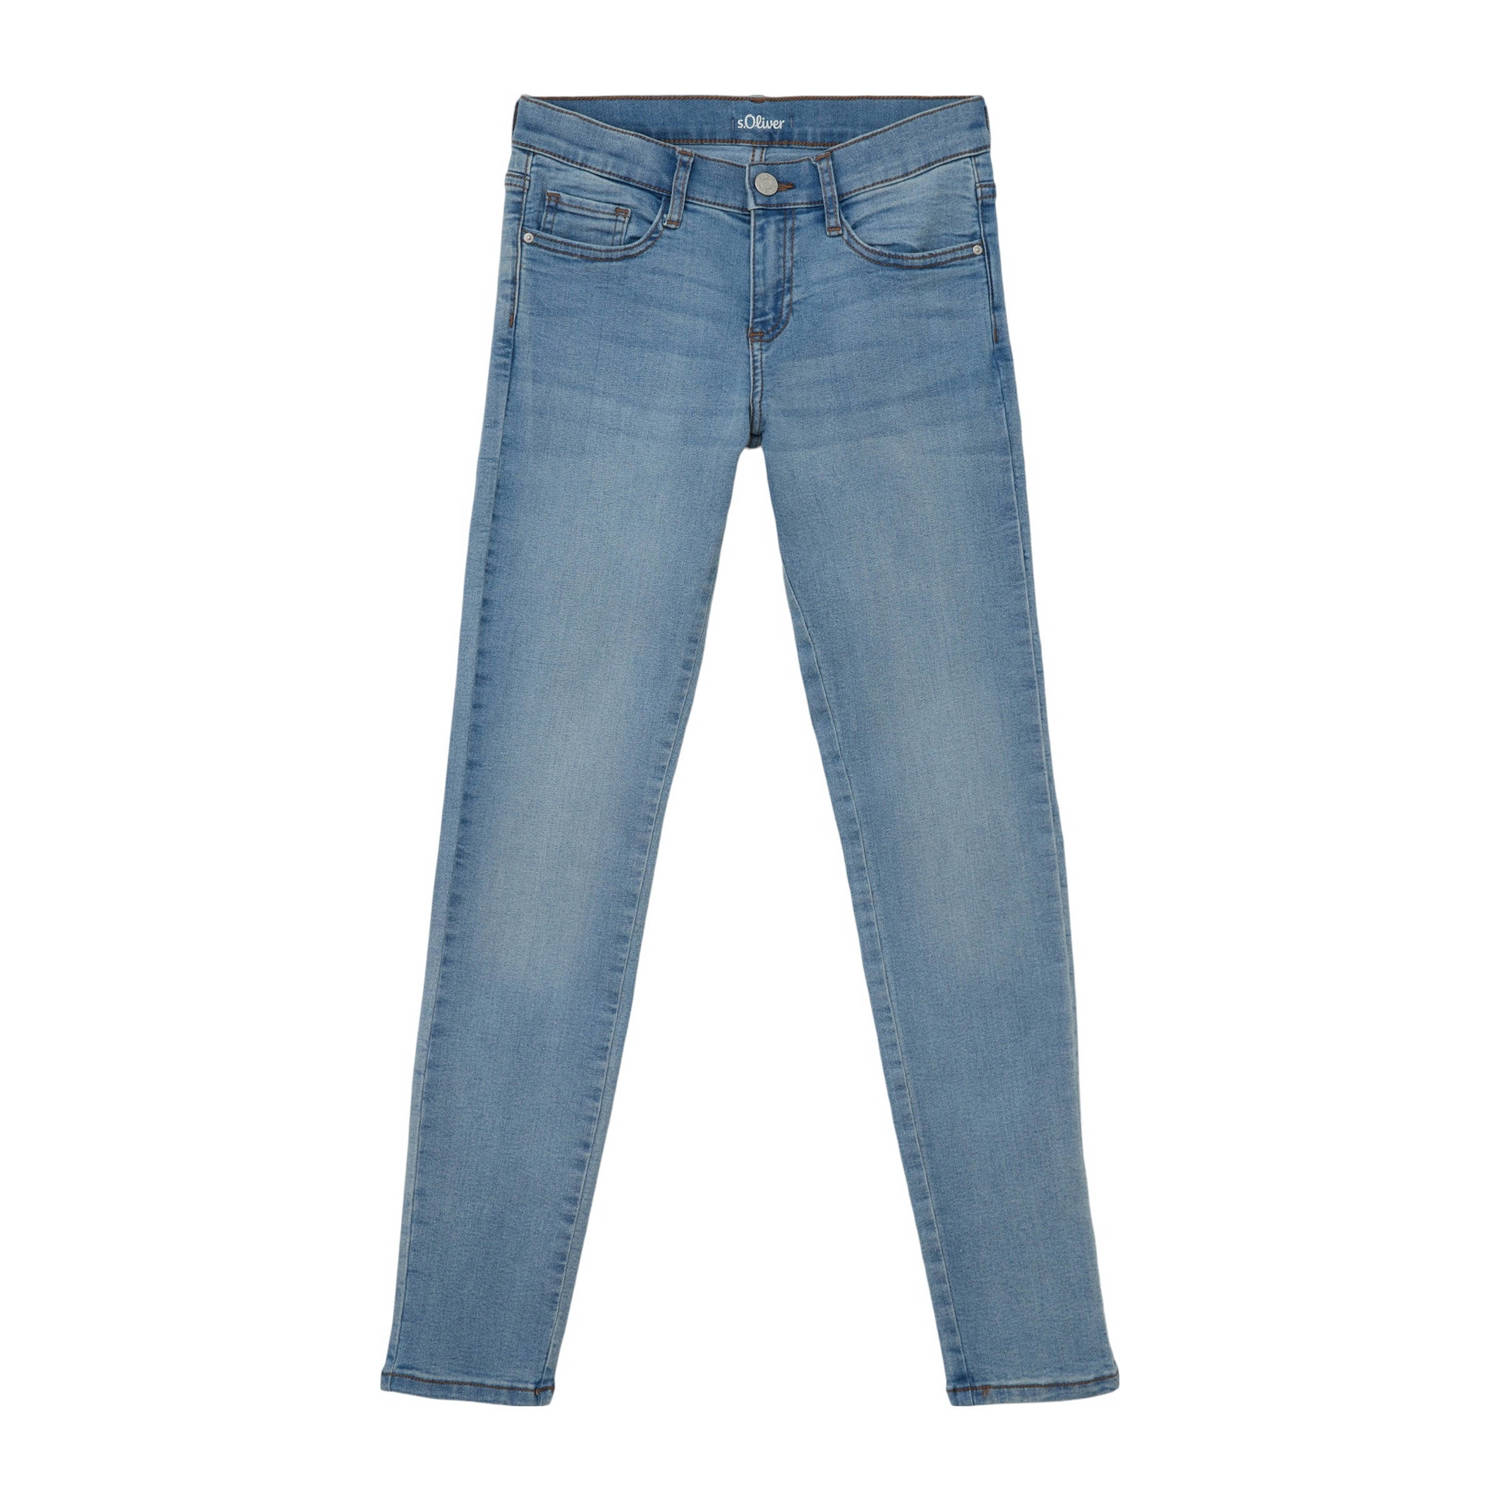 S.Oliver regular fit jeans light blue denim Blauw Meisjes Stretchdenim 134